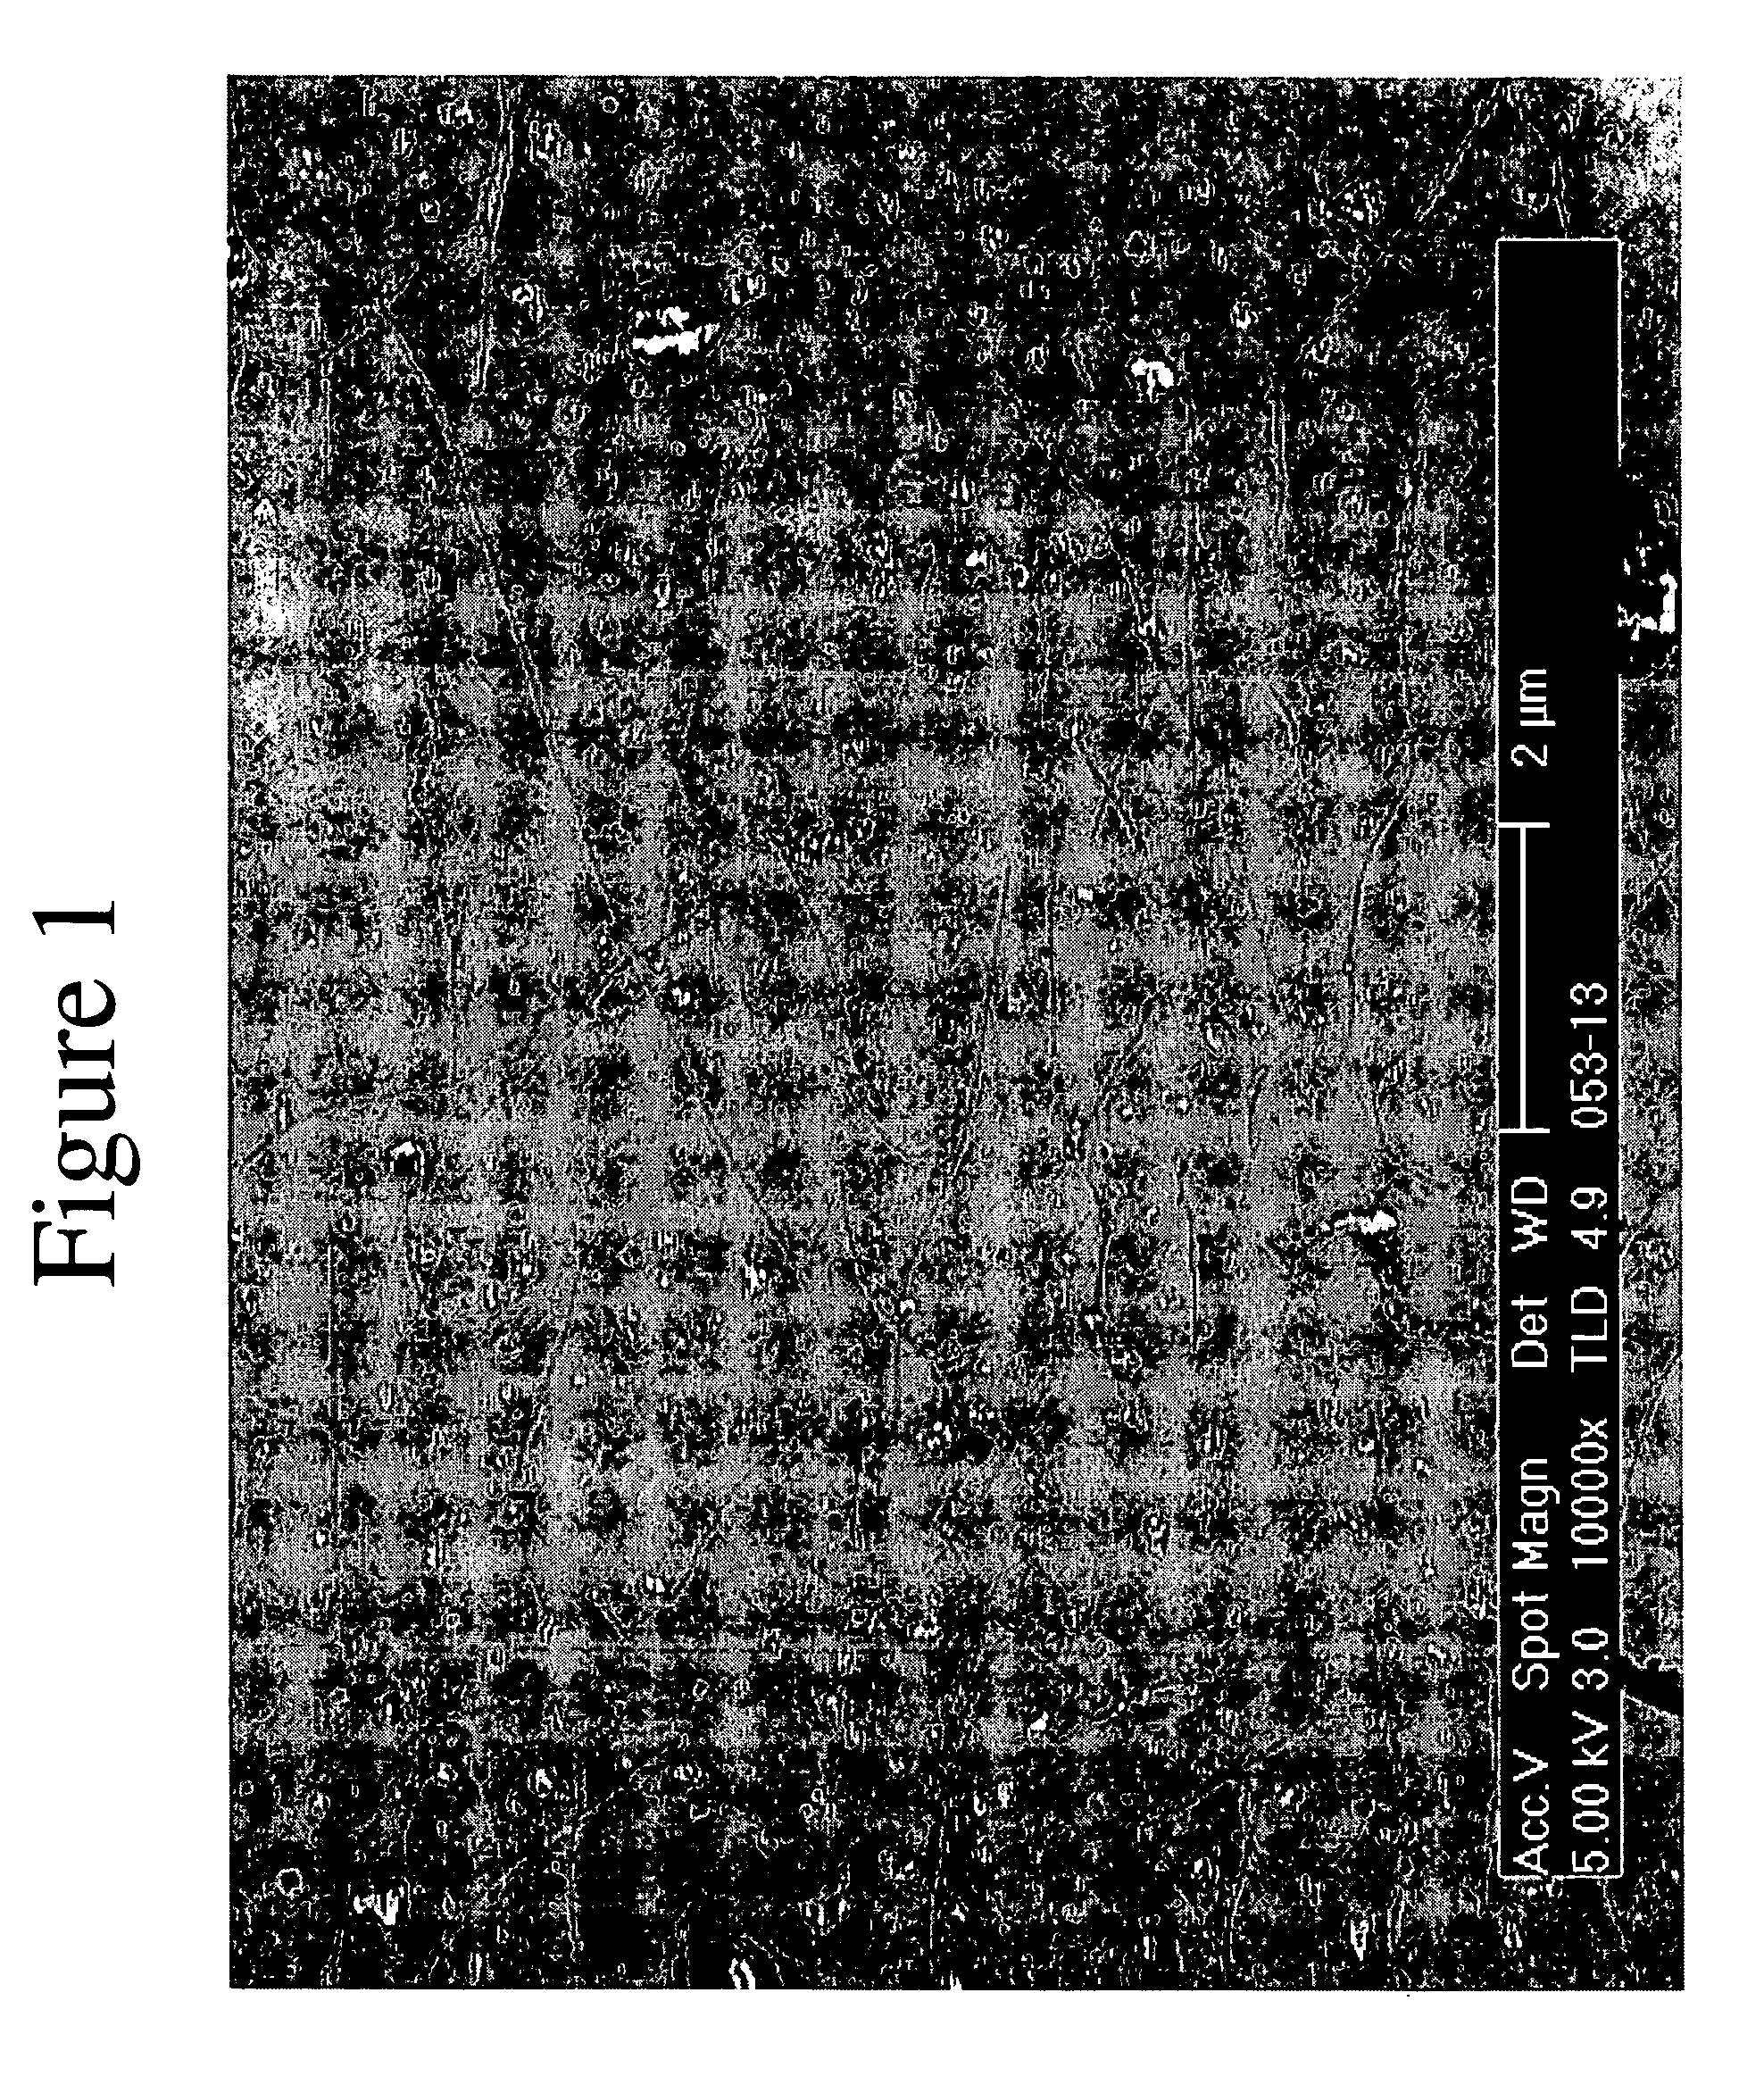 Applicator liquid containing ethyl lactate for preparation of nanotube films